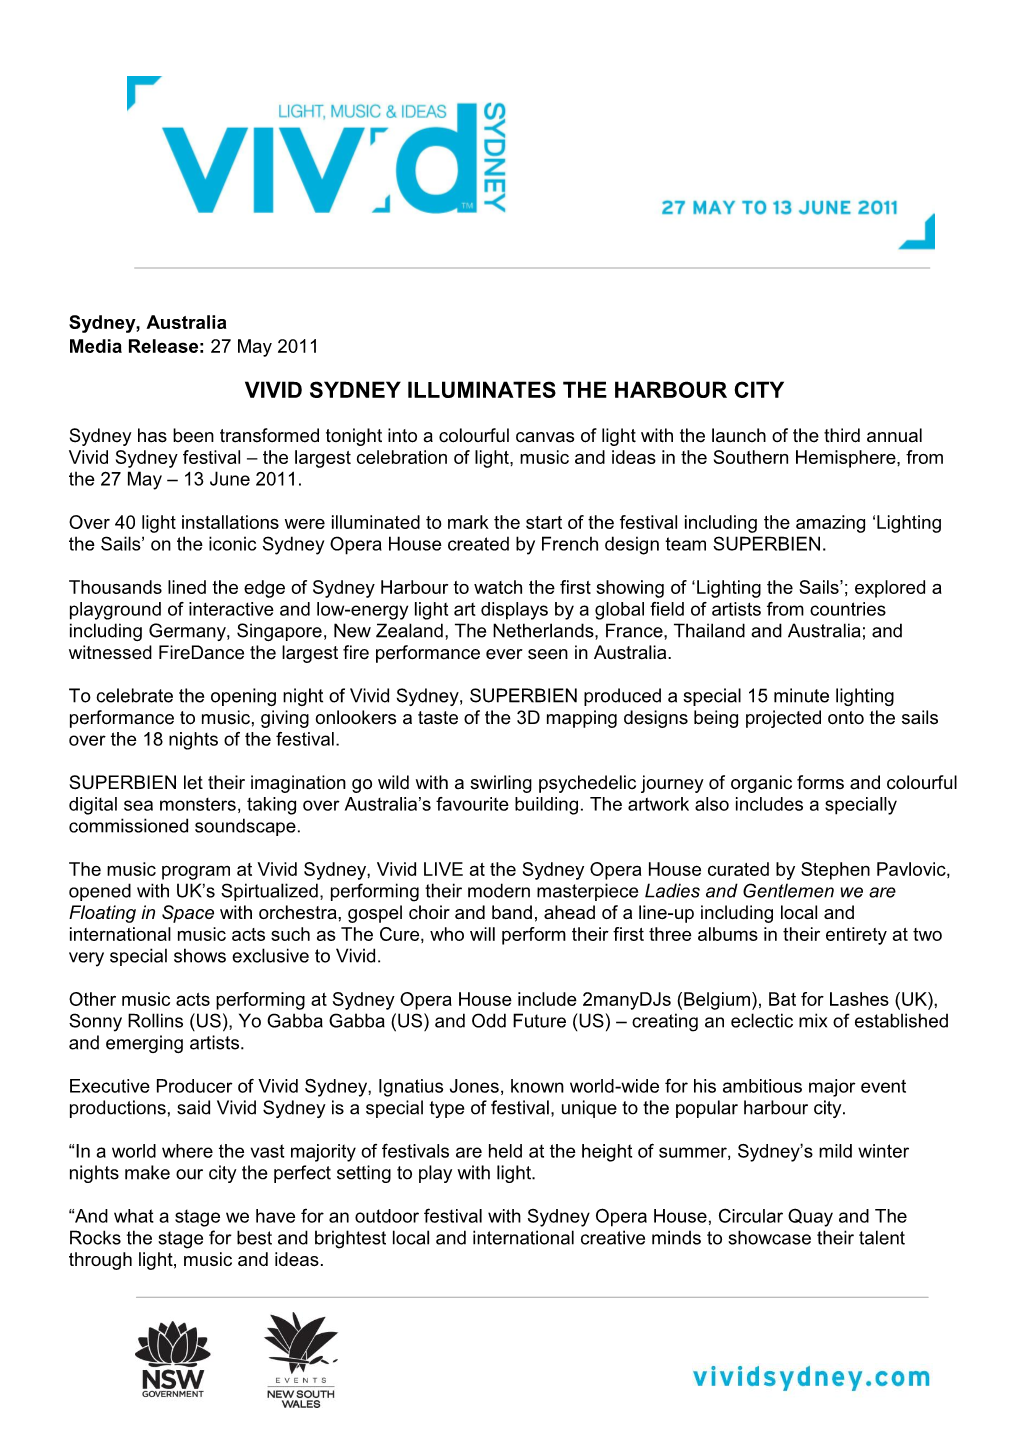 Vivid Sydney Illuminates the Harbour City